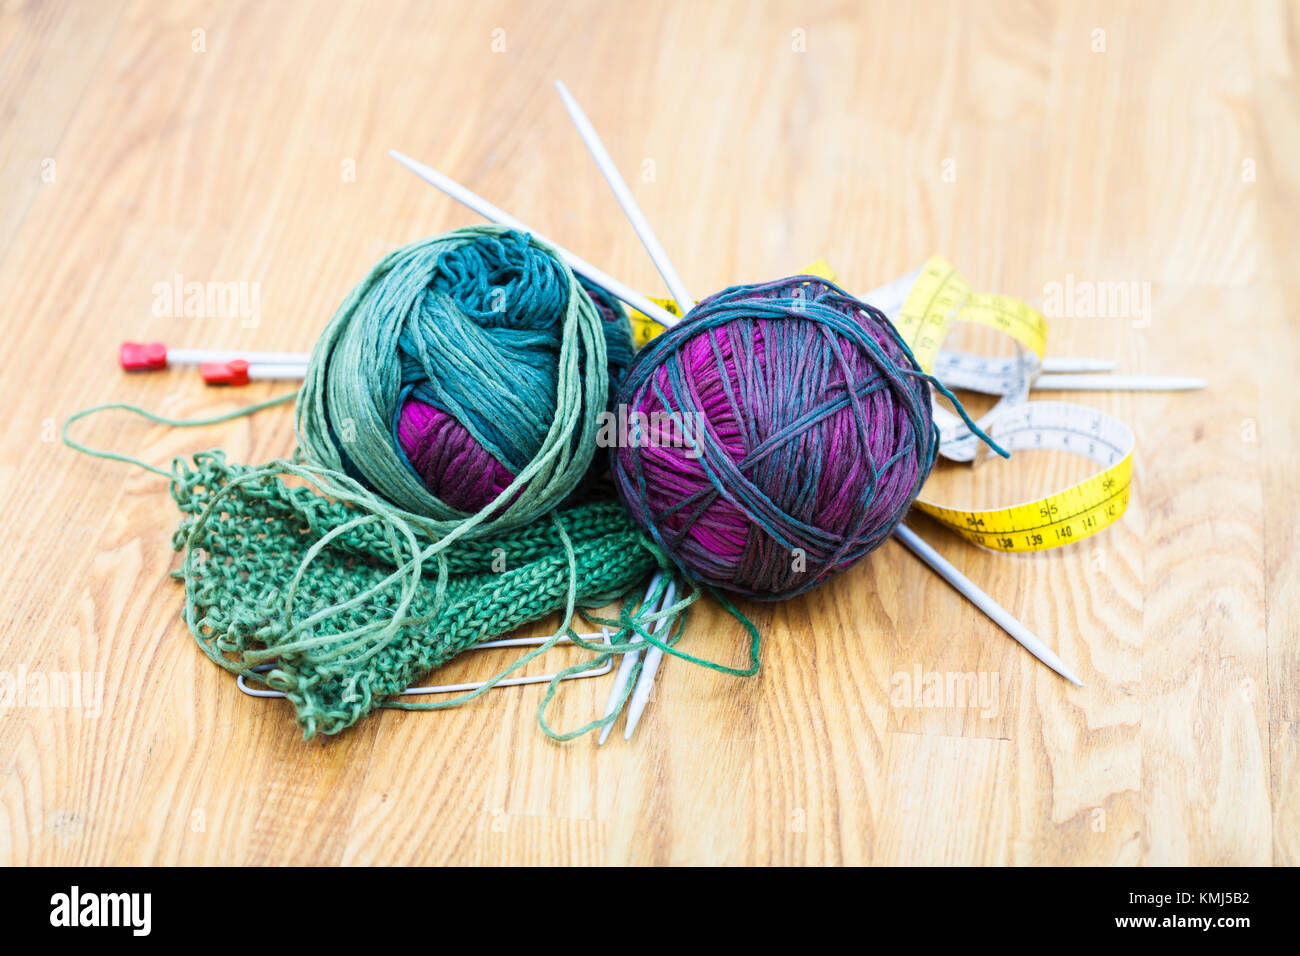 https://c8.alamy.com/comp/KMJ5B2/needlework-still-life-hand-knitting-tools-and-wool-yarns-on-wooden-KMJ5B2.jpg